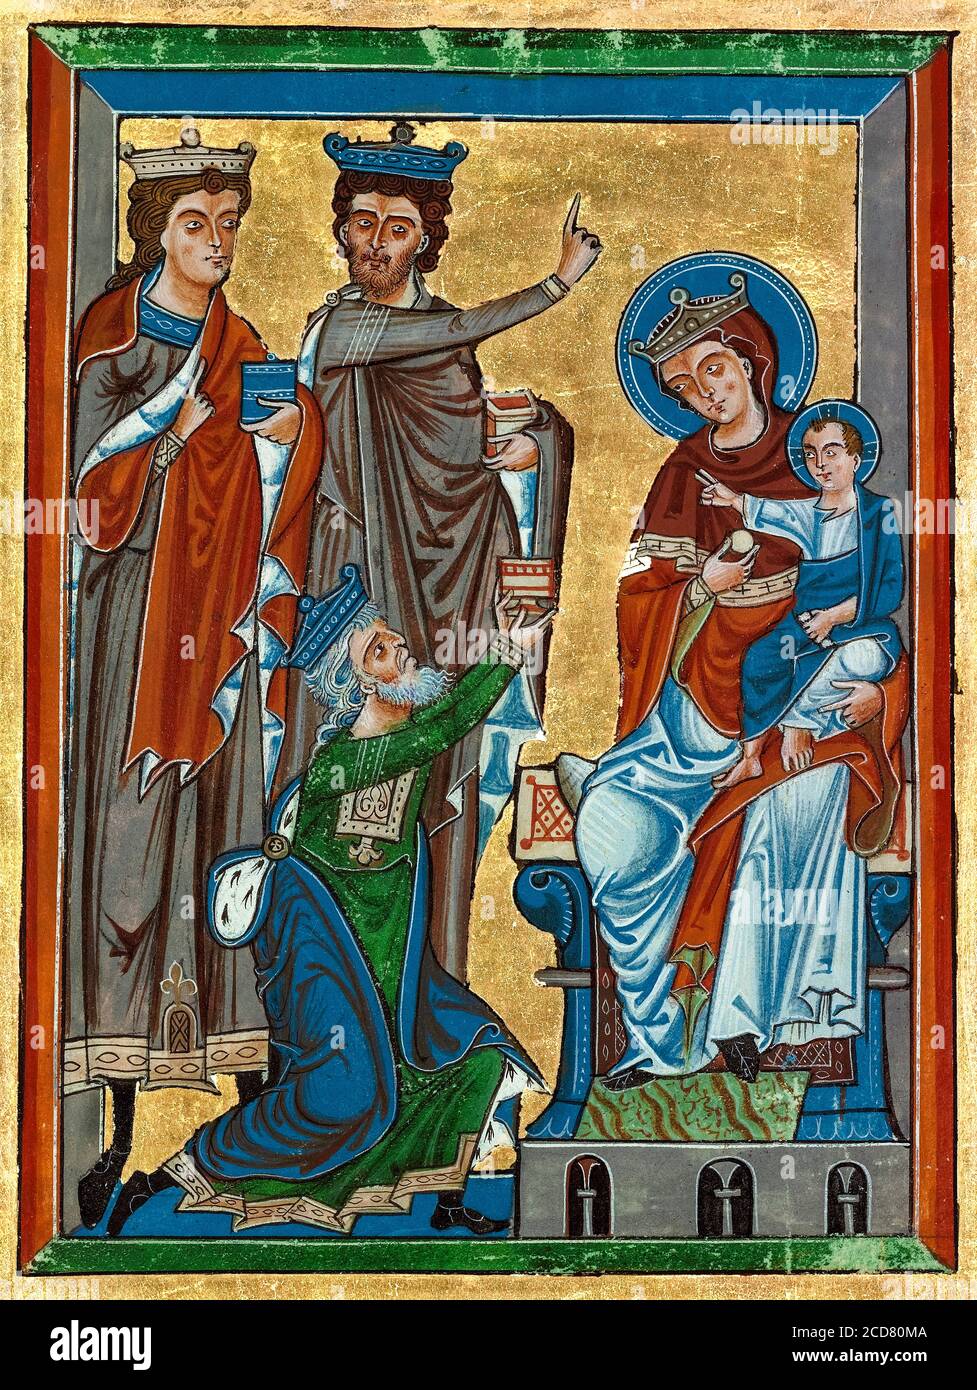 L'adoration des Magi d'un Psalter du XIIIe siècle, manuscrit illuminé vers 1240 Banque D'Images